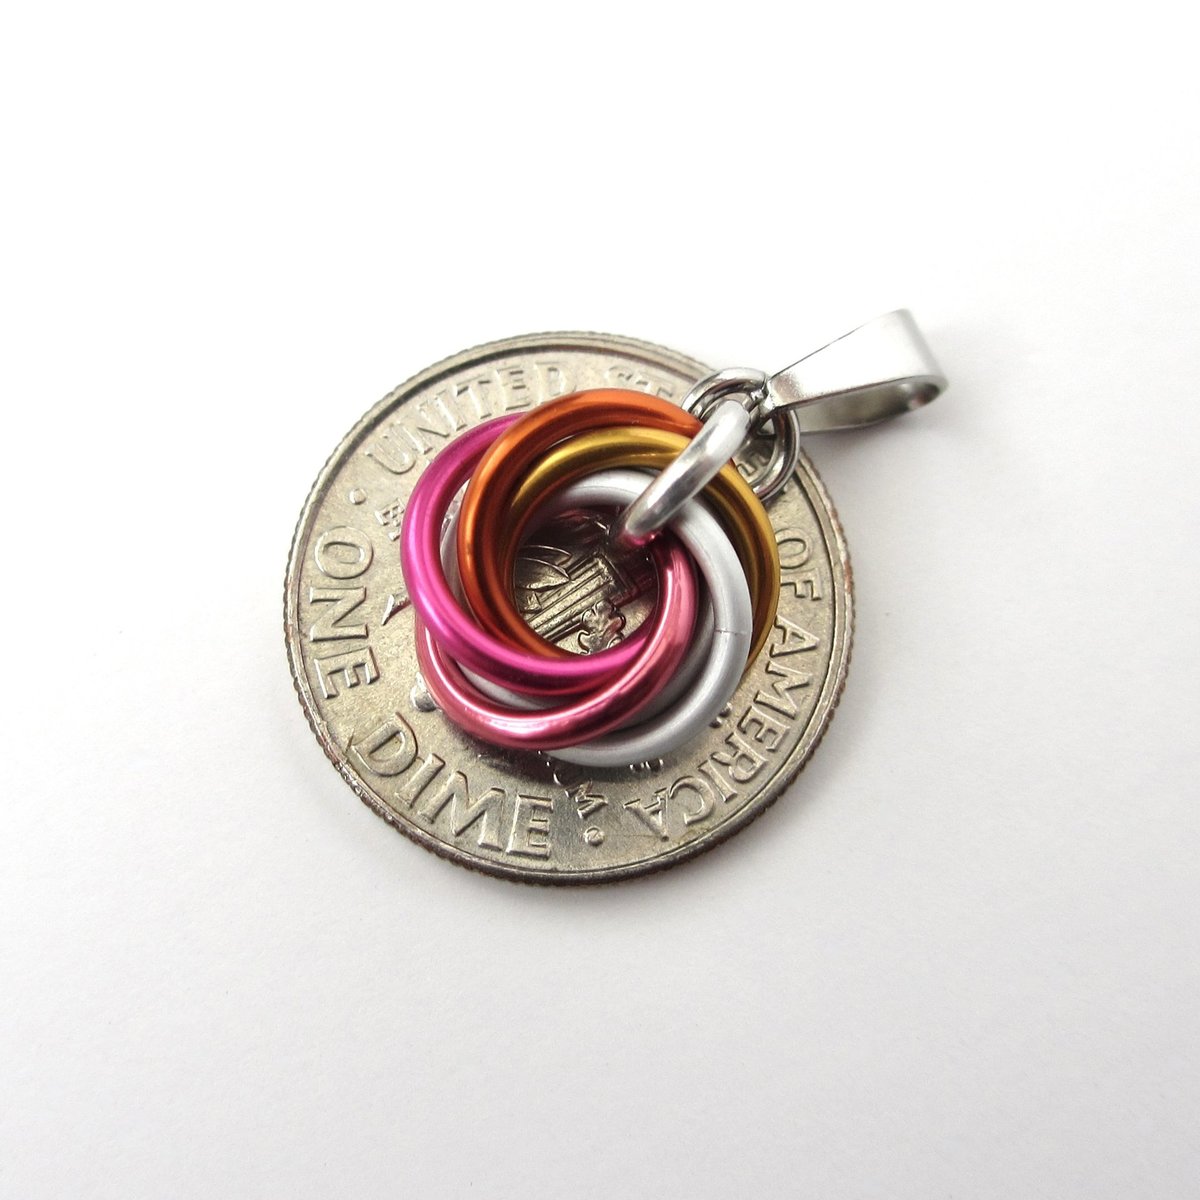 Tiny lesbian pride pendant, chainmail love knot charm, subtle, discreet LGBTQ jewelry